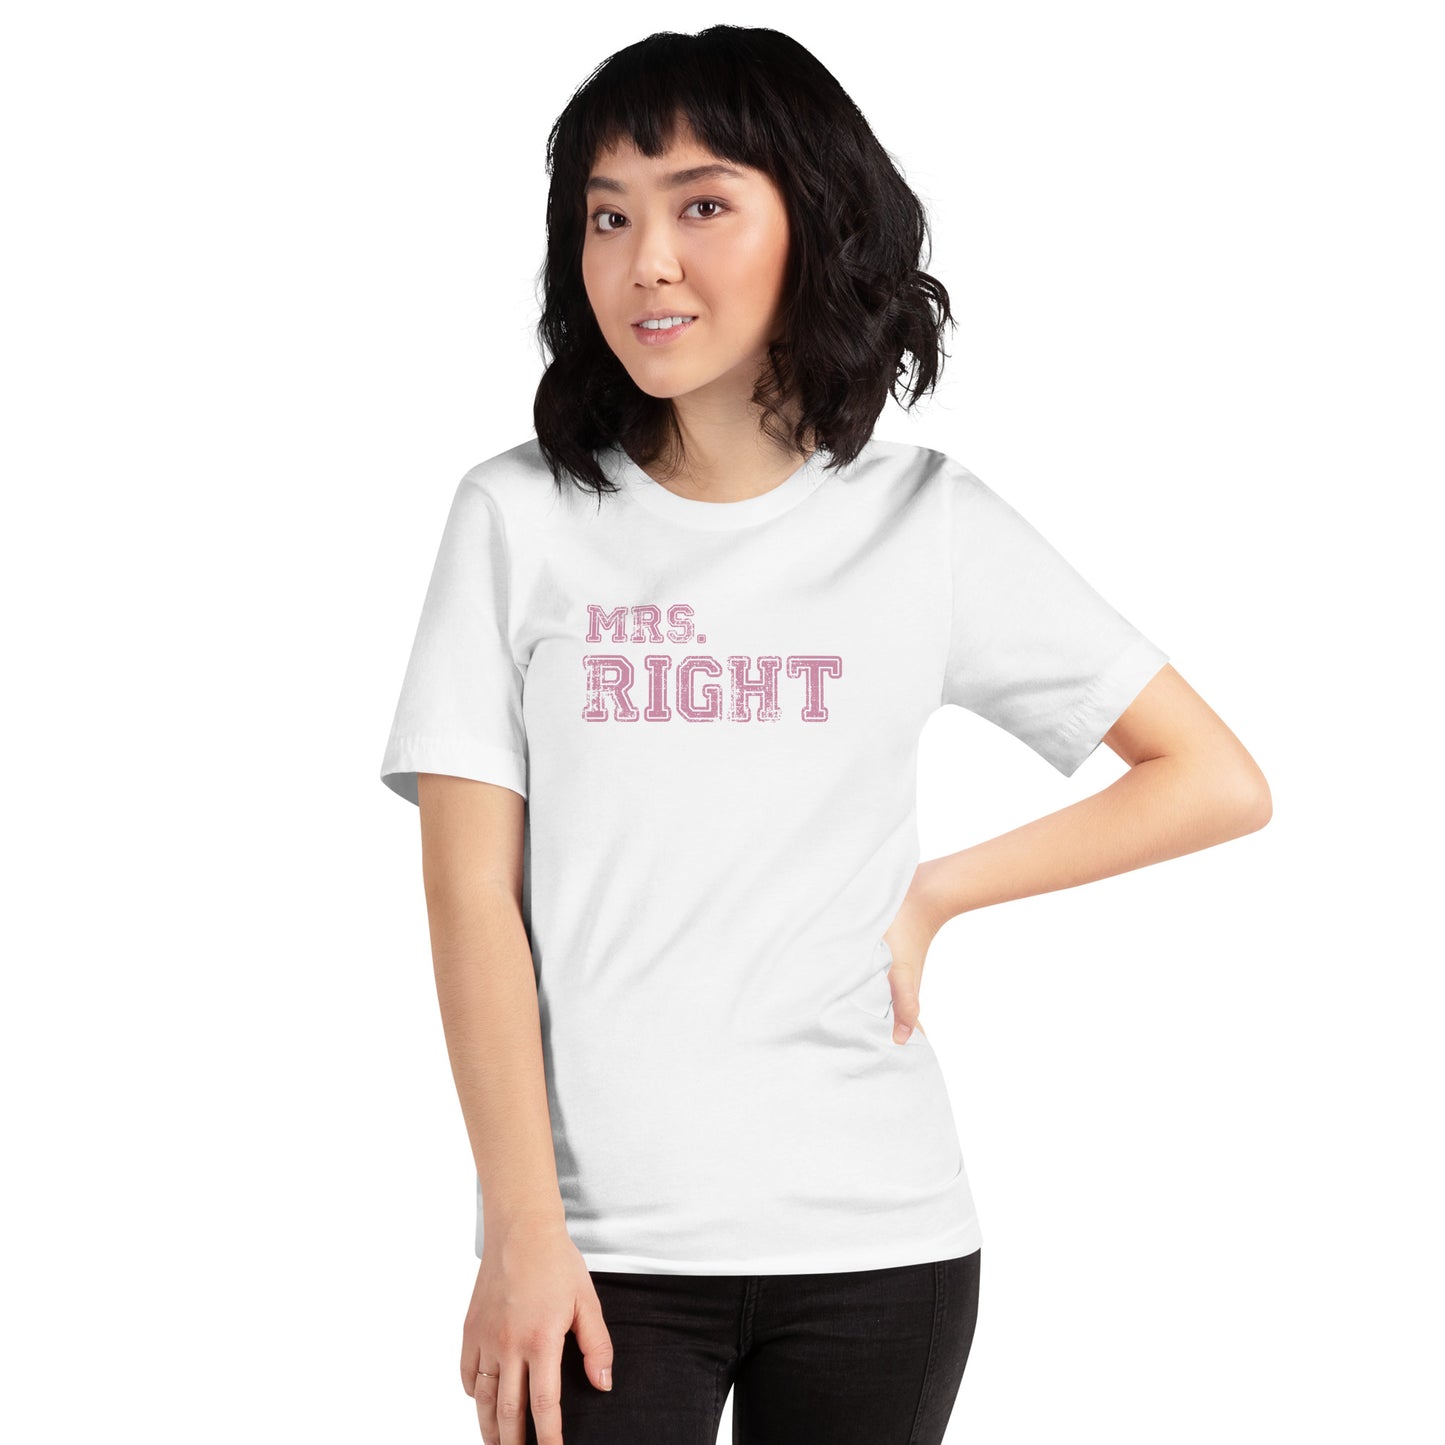 Mrs. Right Unisex t-shirt